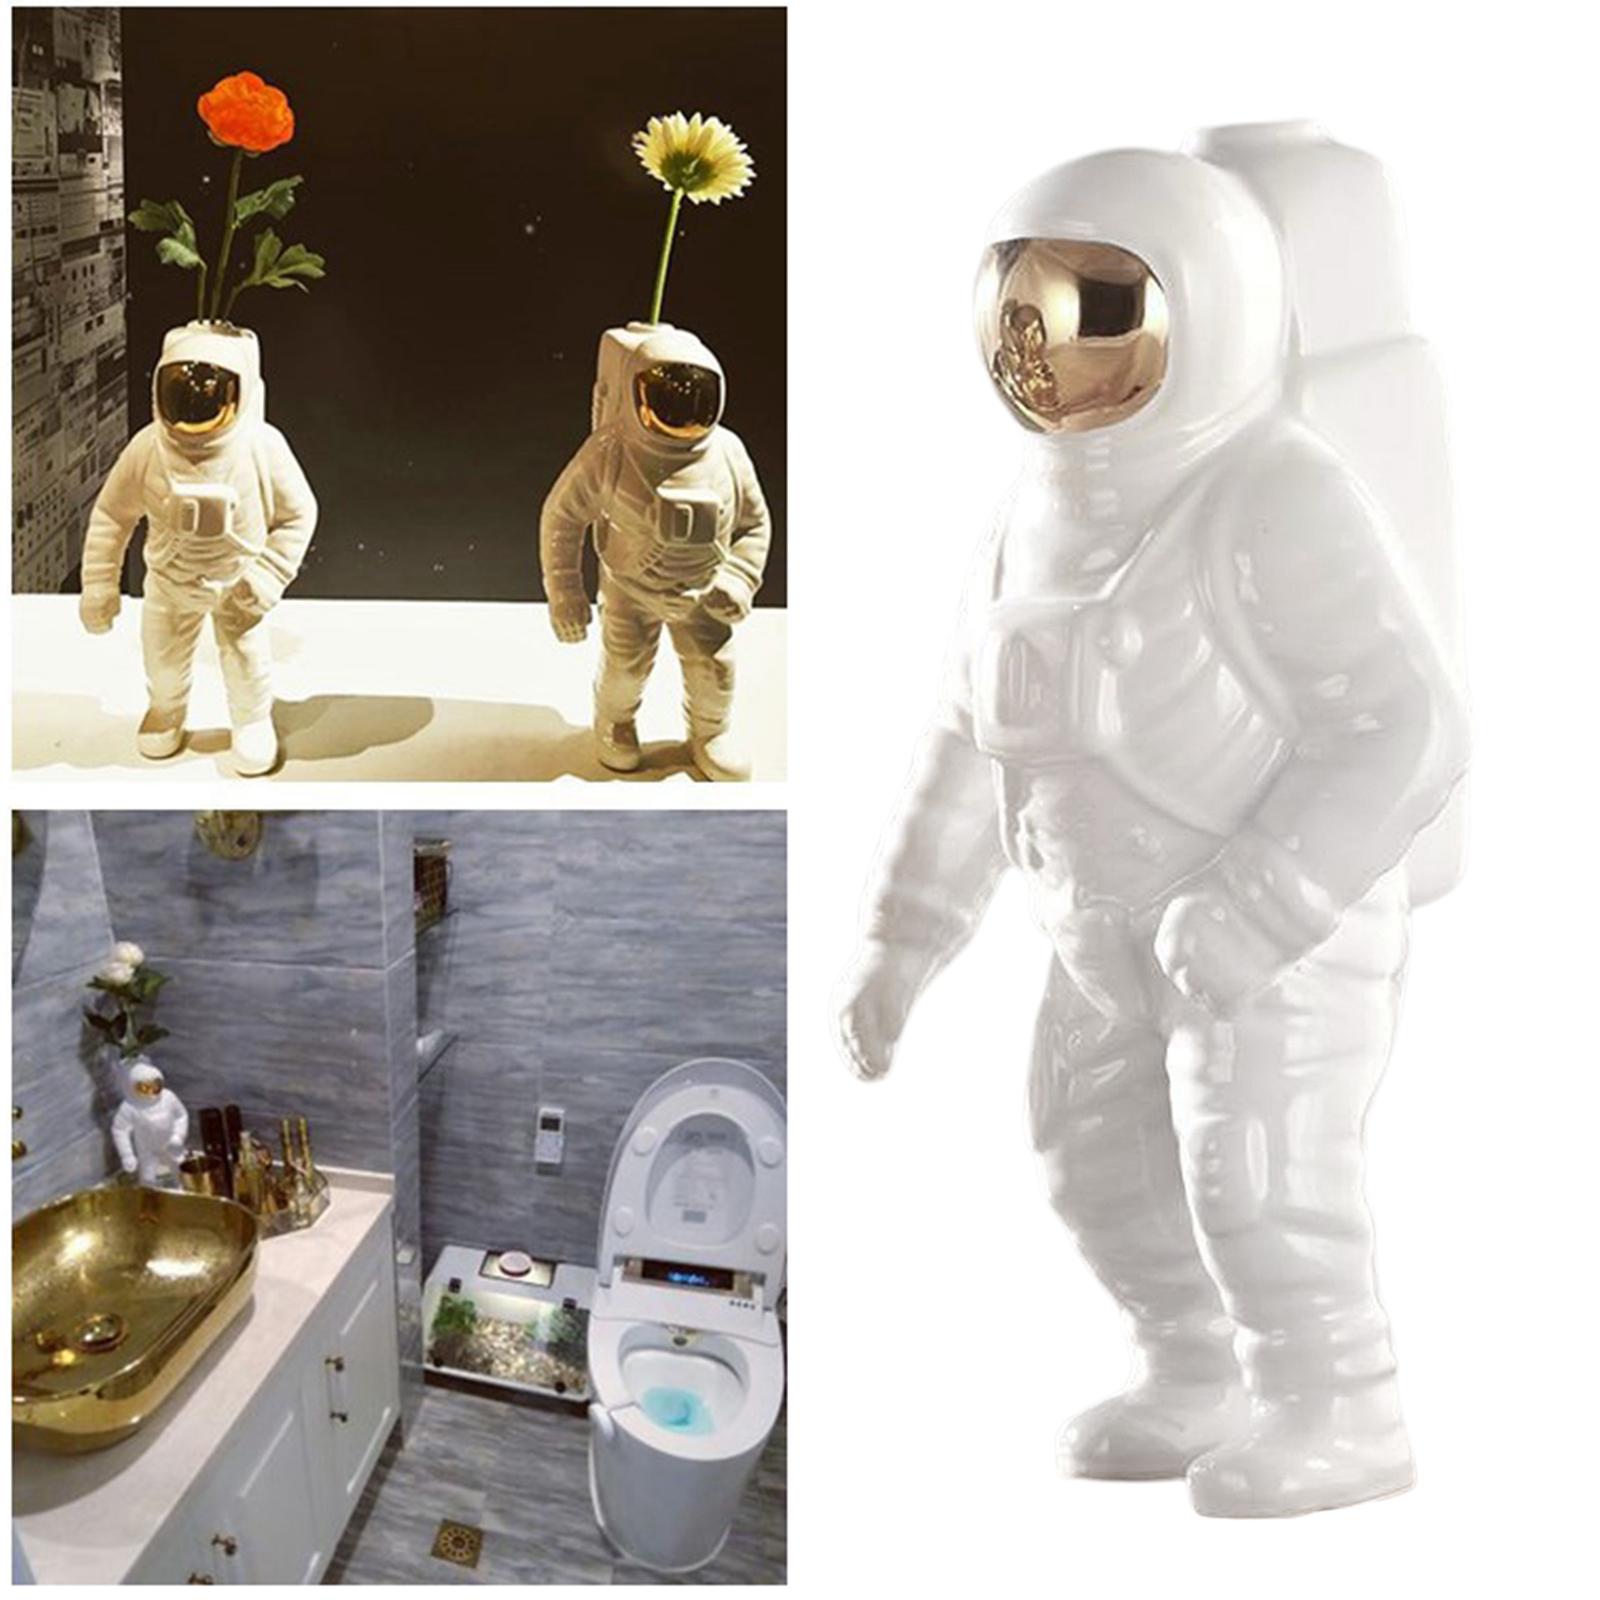 Astronaut Model Figure Ceramic Cosmonaut Statue Space Man Sculpture Fashion Creative Office Home Desktop Decor Art Ornaments